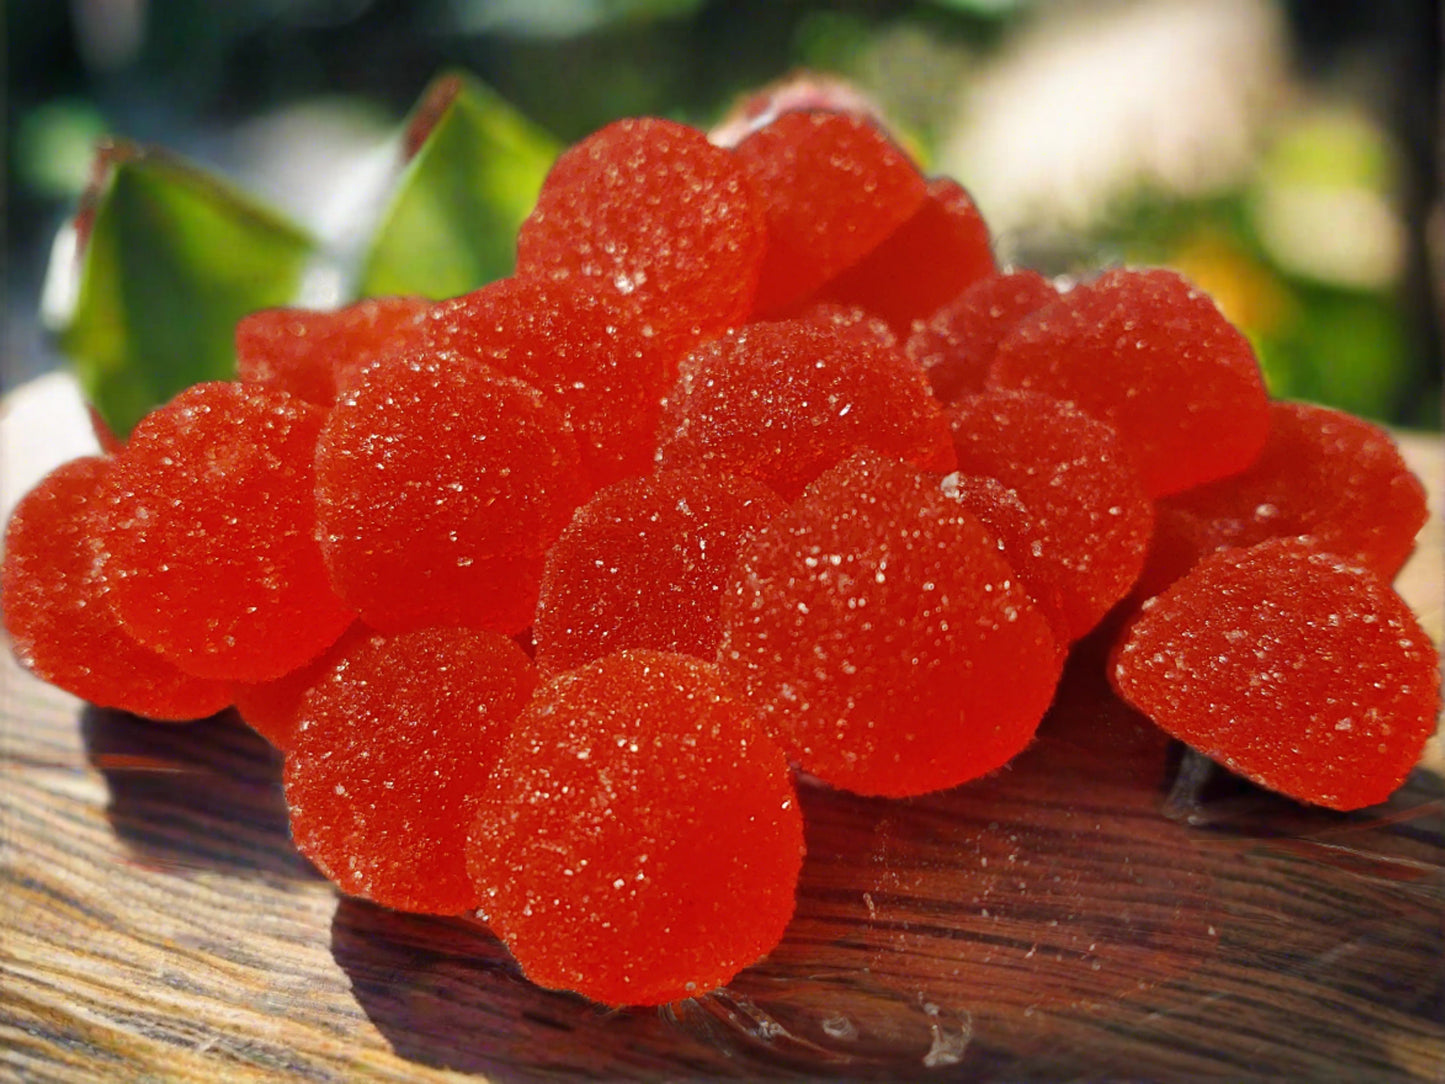 CBD Cherry gummies 50mg